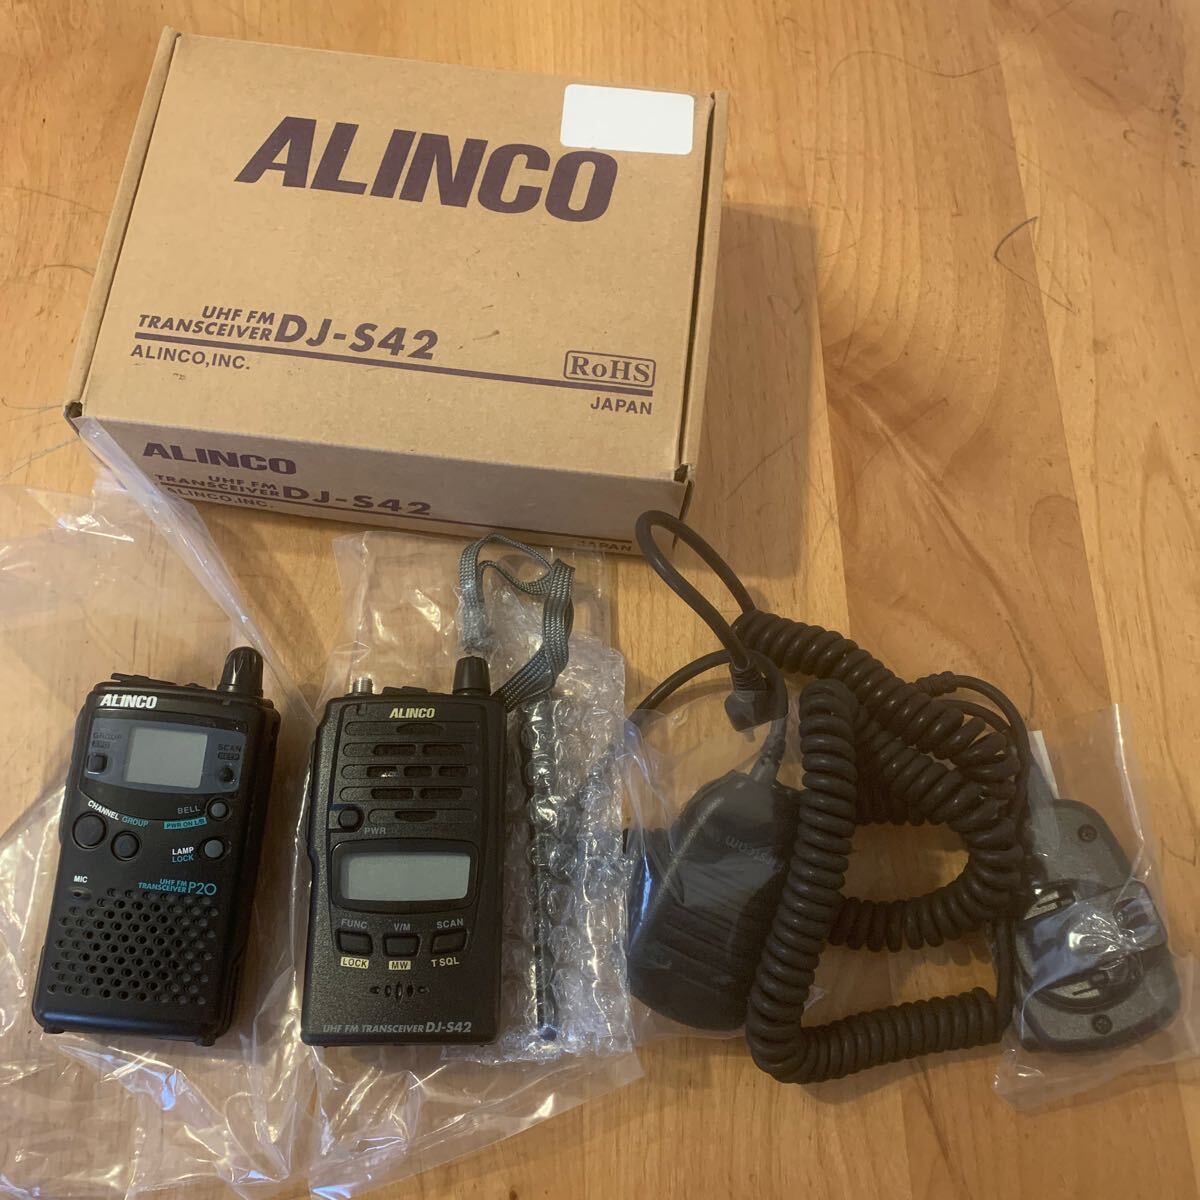 ALINCO Alinco UHF FM TRANSCEIVER DJ-S42 CE0336 transceiver transceiver amateur radio machine box equipped 